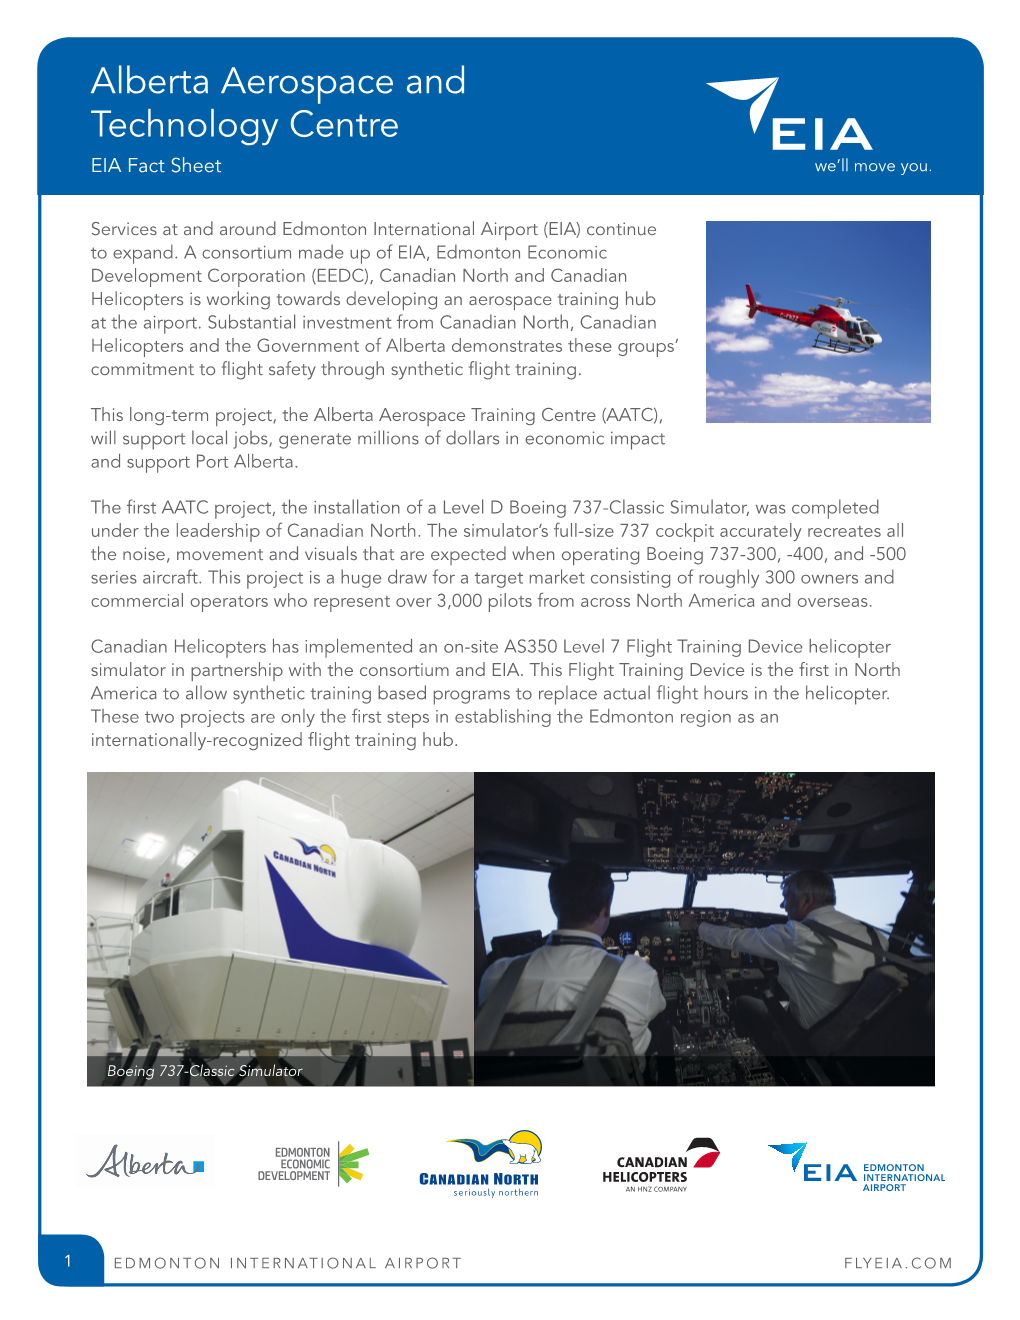 Alberta Aerospace and Technology Centre EIA Fact Sheet